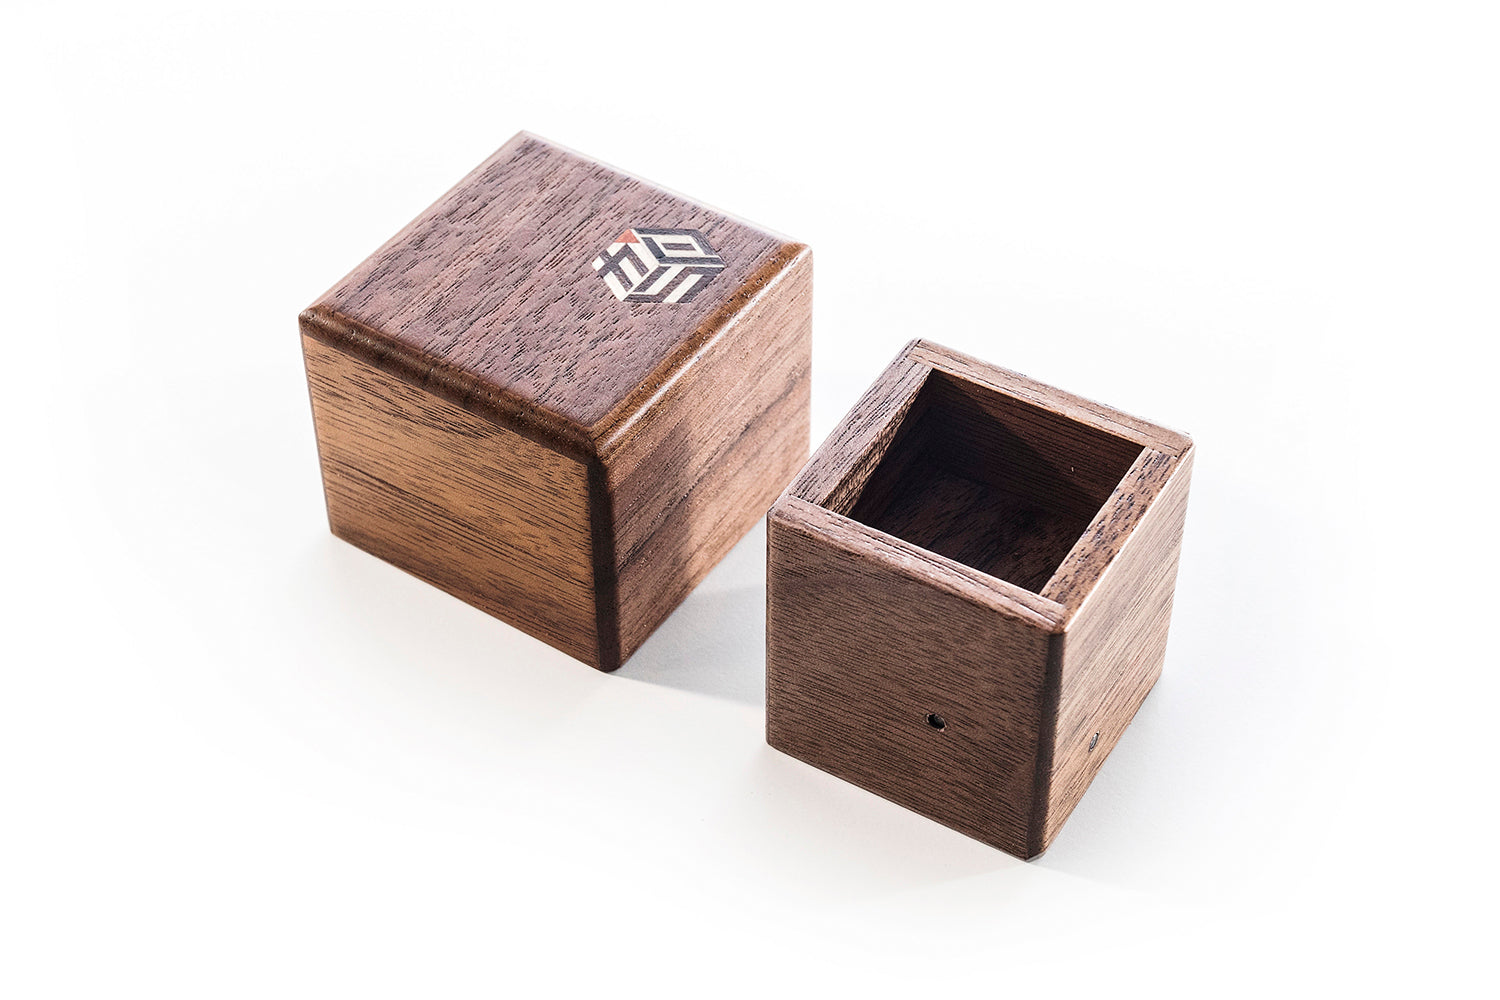 Karakuri Small Box #6, Other Japanese Puzzle Boxes